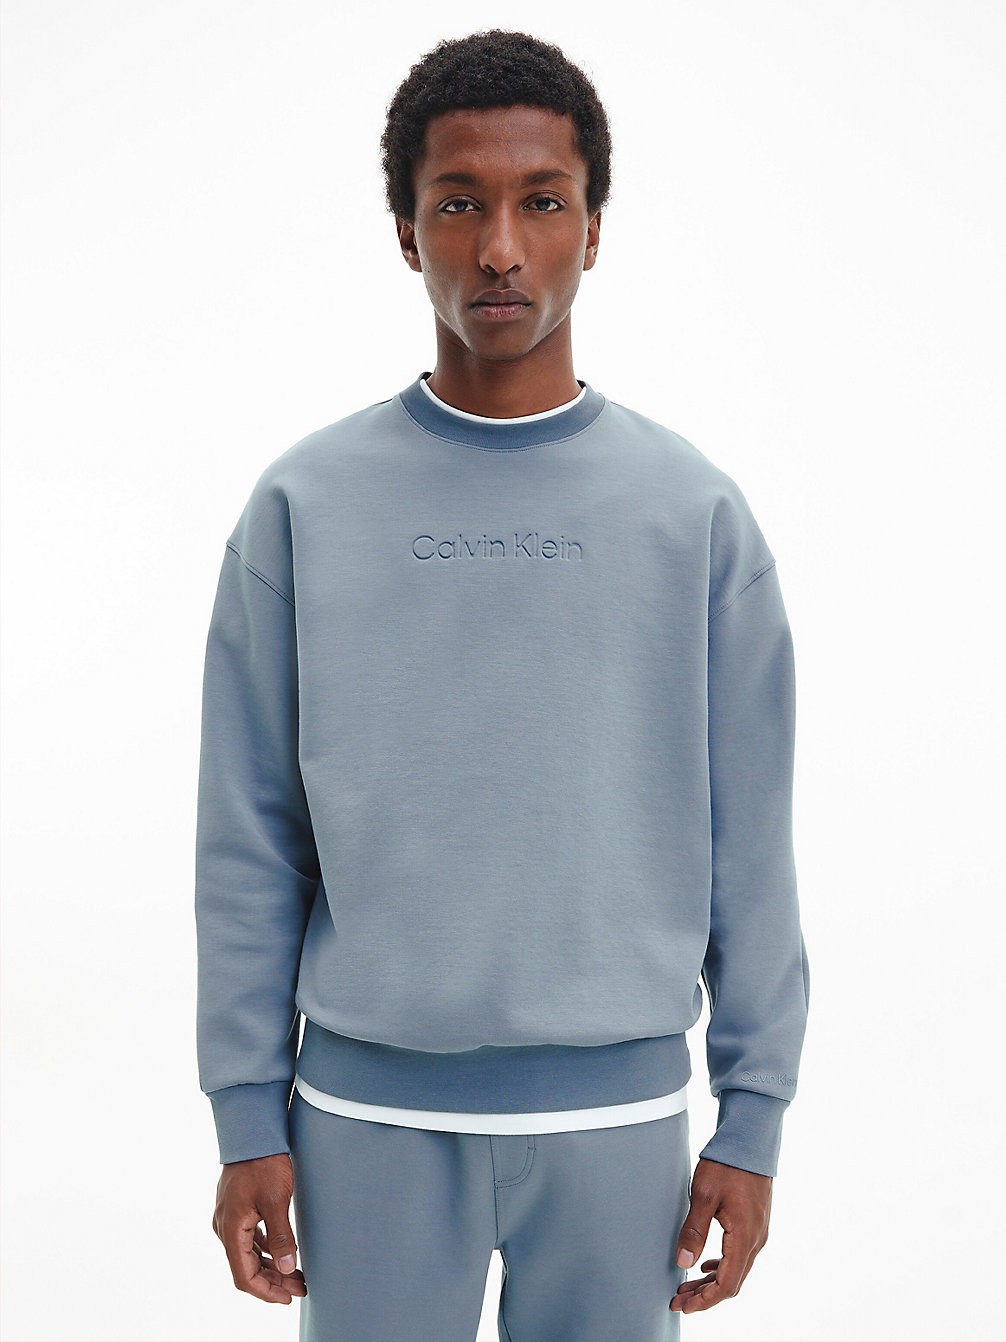 GREY TAR Sweat-Shirt Relaxed En Coton Bio undefined hommes Calvin Klein